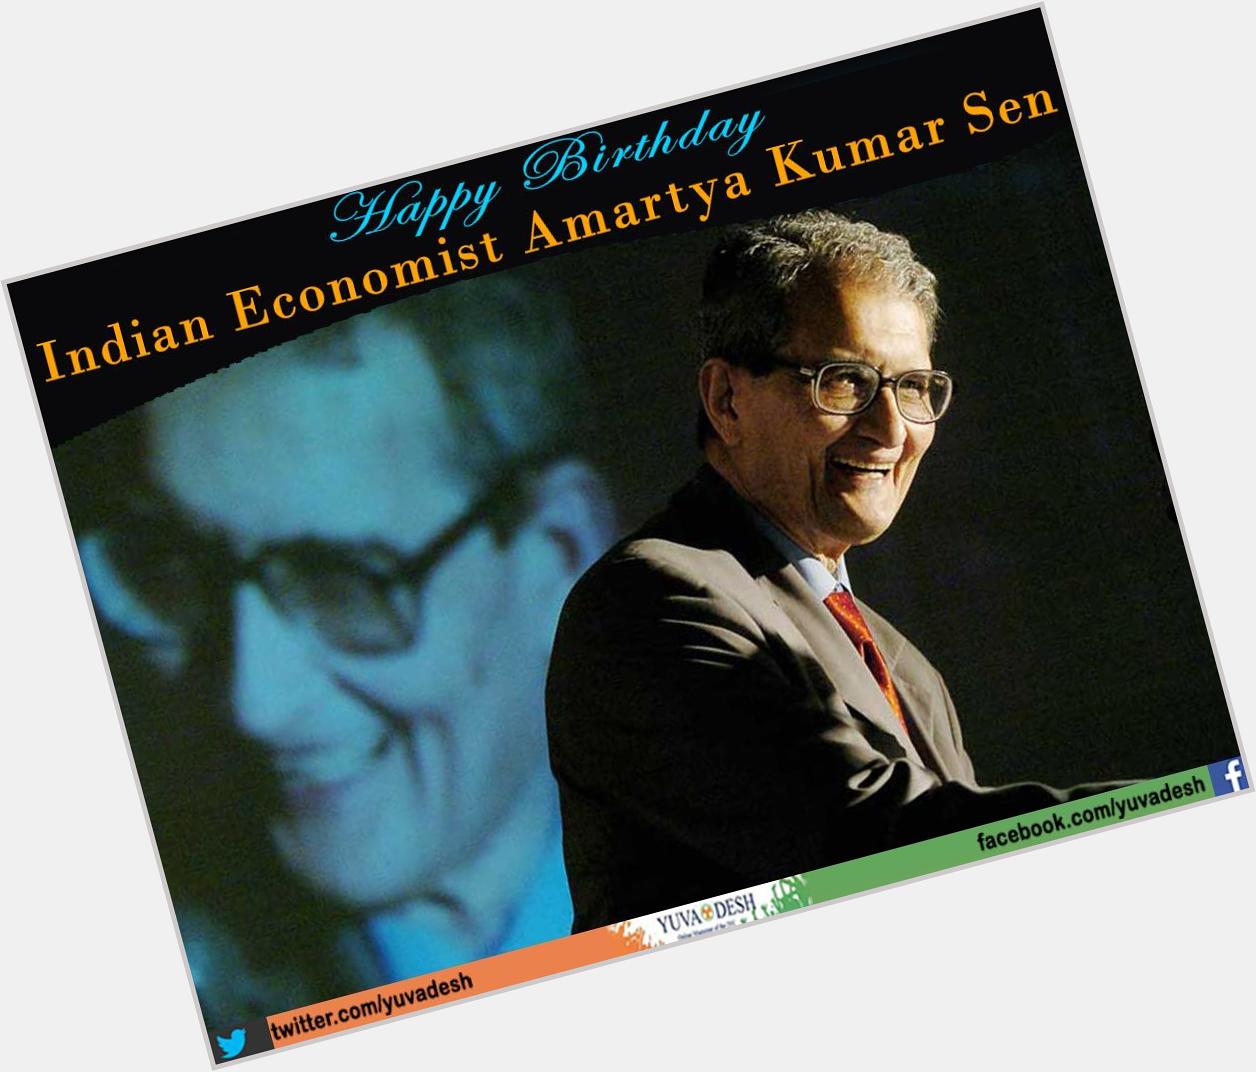 Wishing Bharat Ratna Indian economist Amartya Sen a very Happy Birthday. 